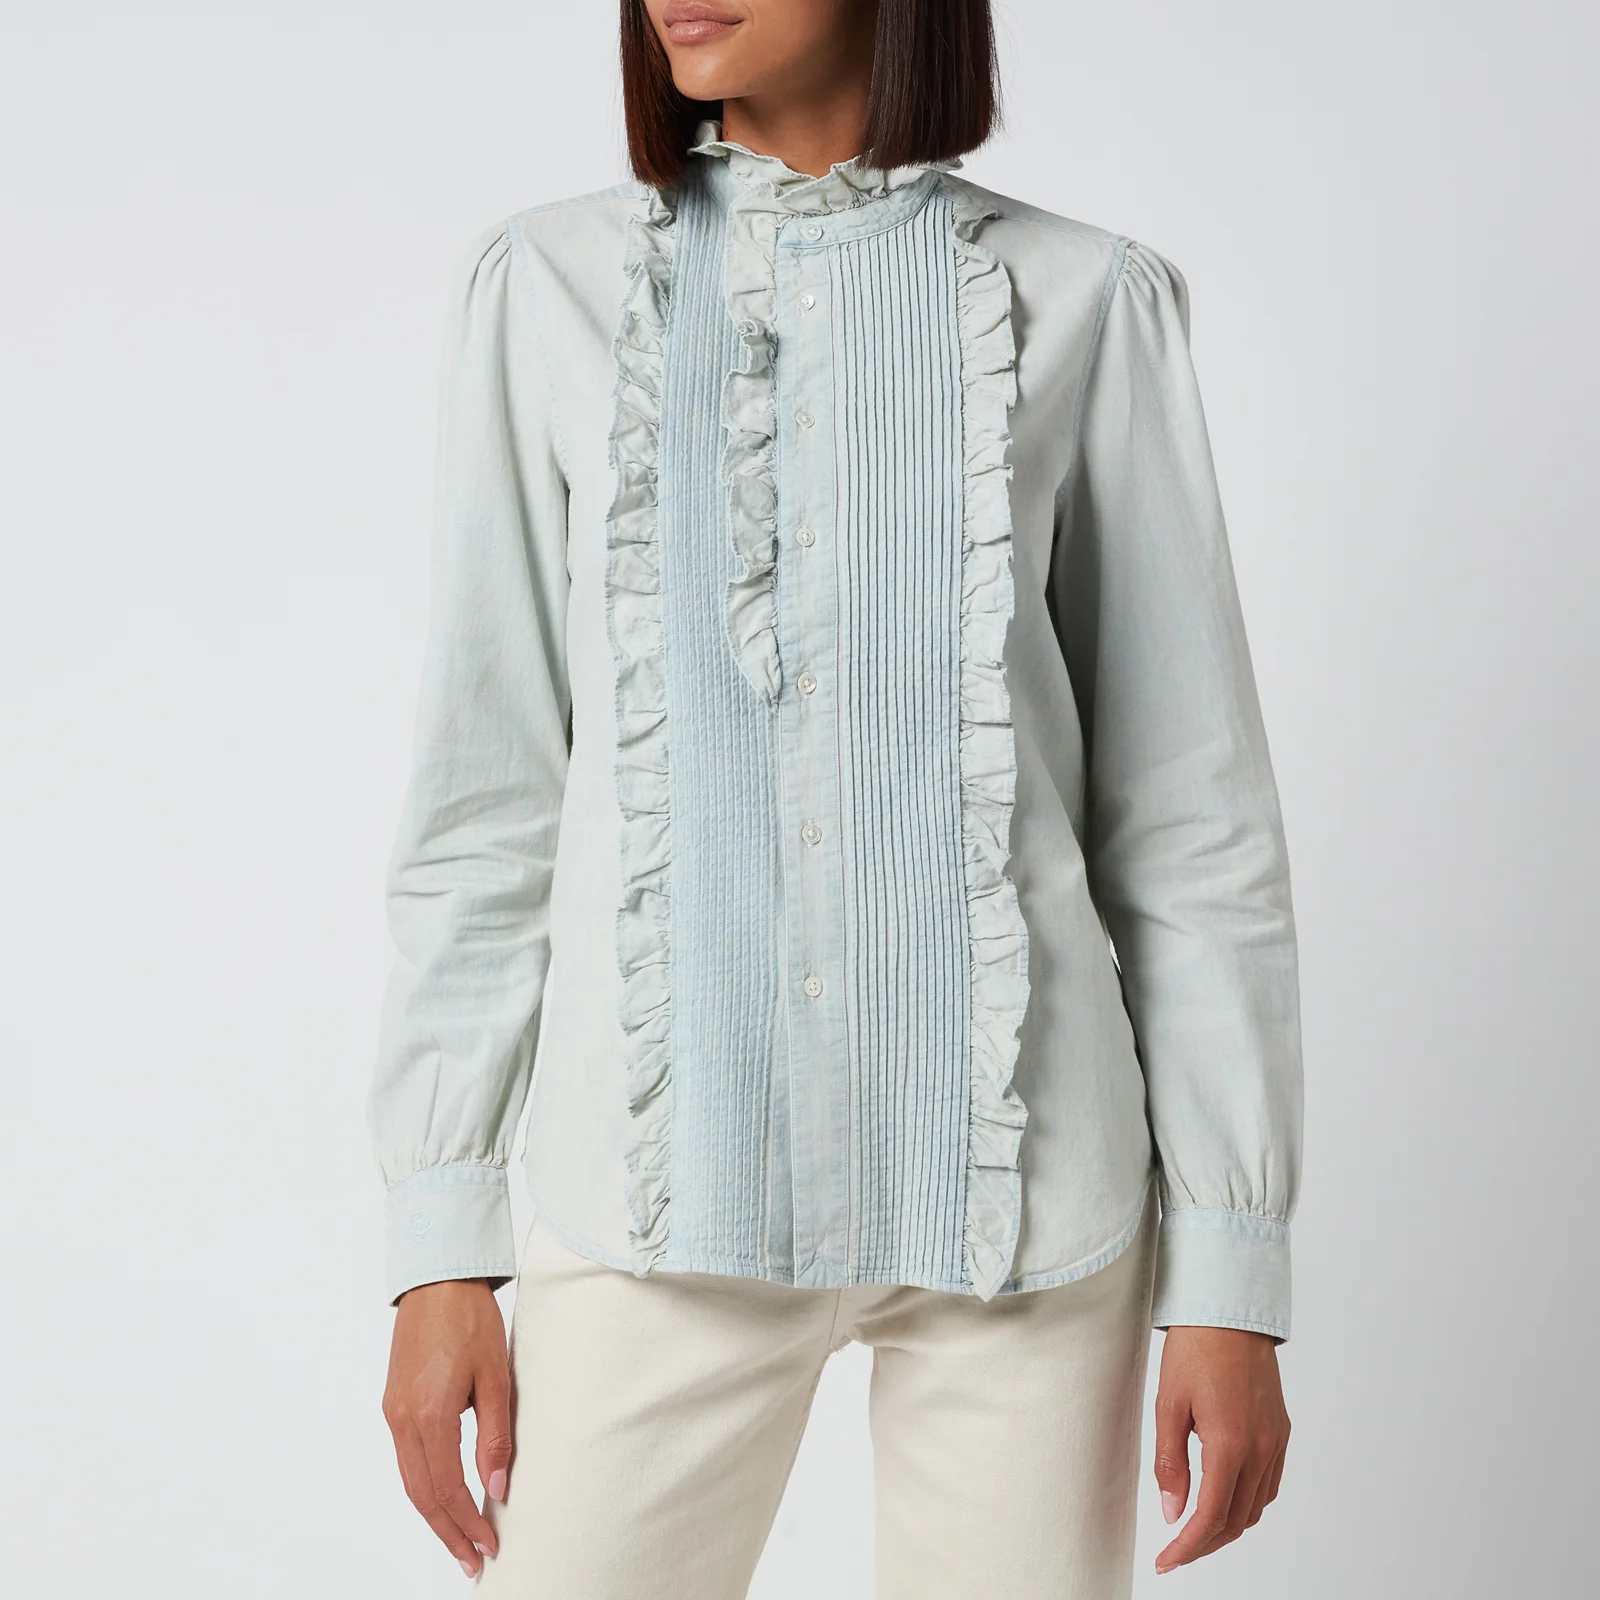 Polo Ralph Lauren Women's Denim Frill Shirt - Chambray Image 1